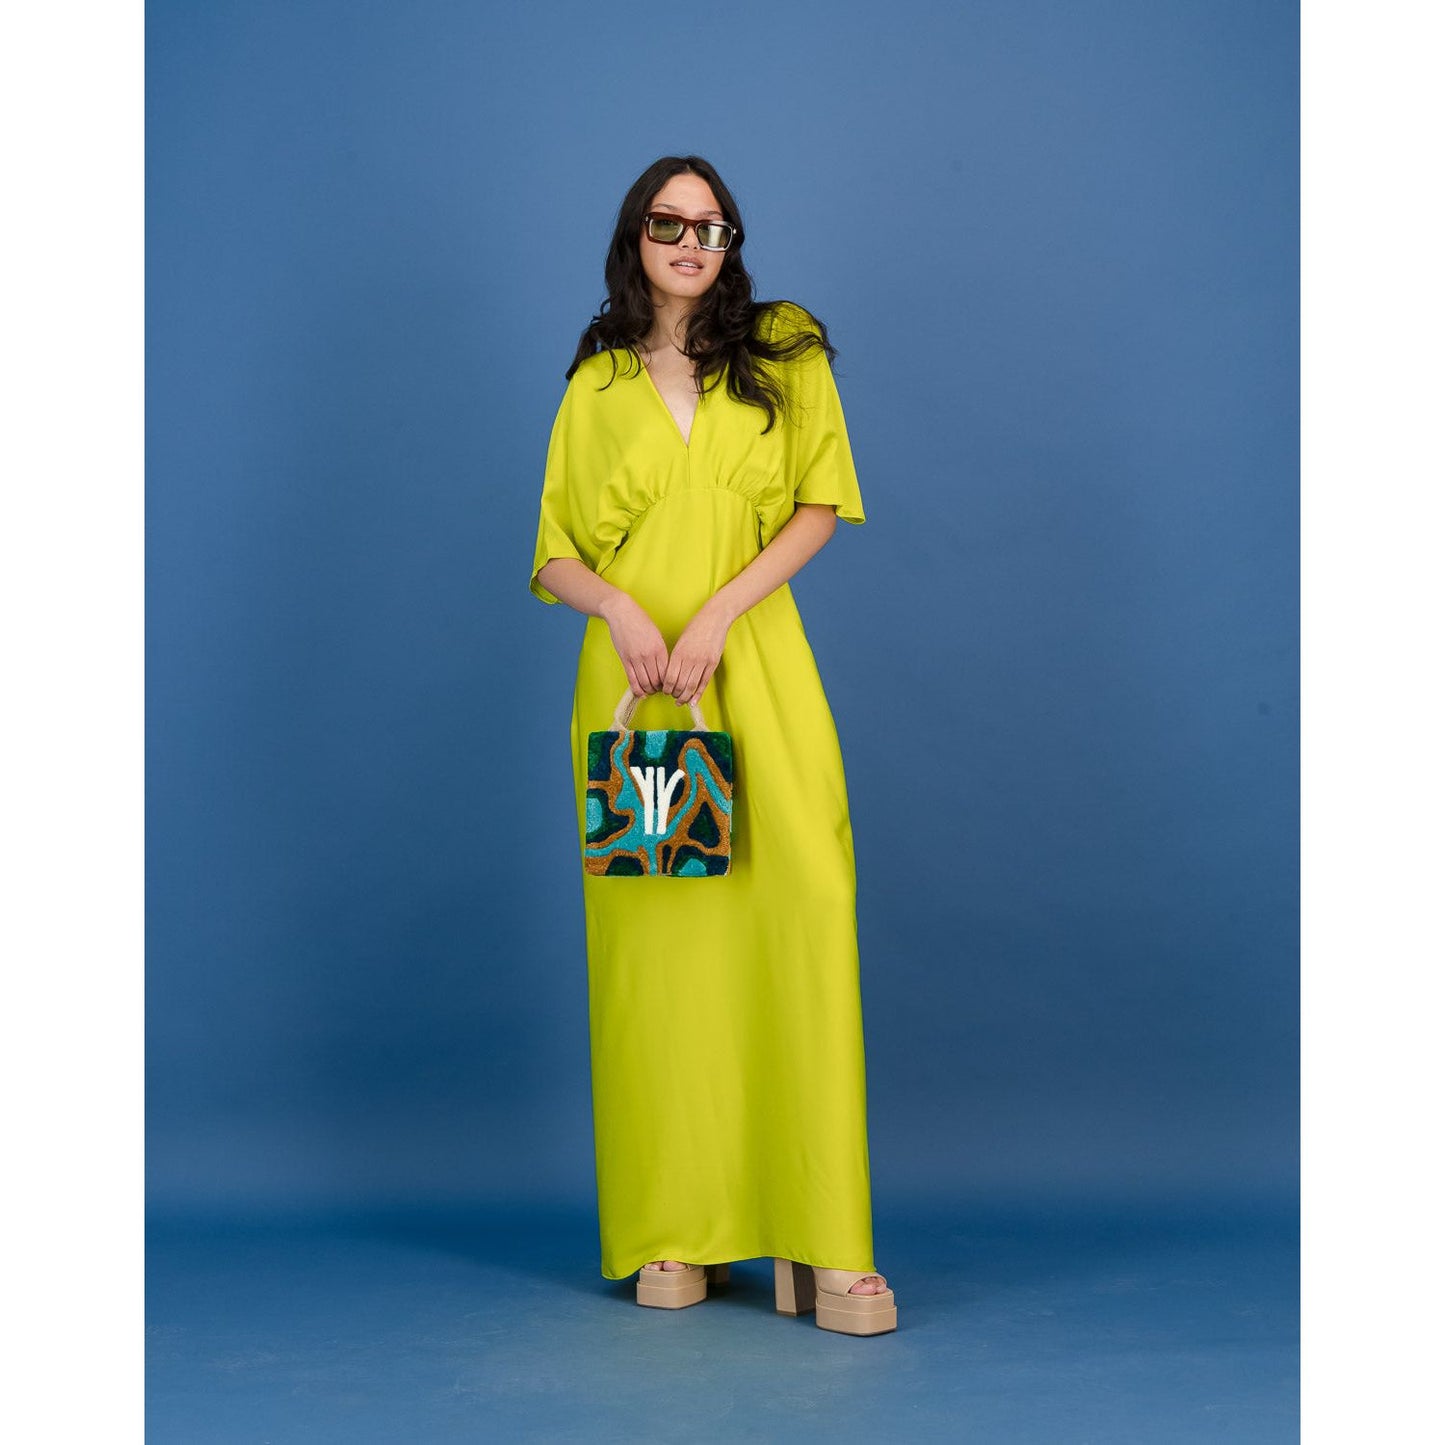 Short Sleeve Satin Formal Dress in Lime